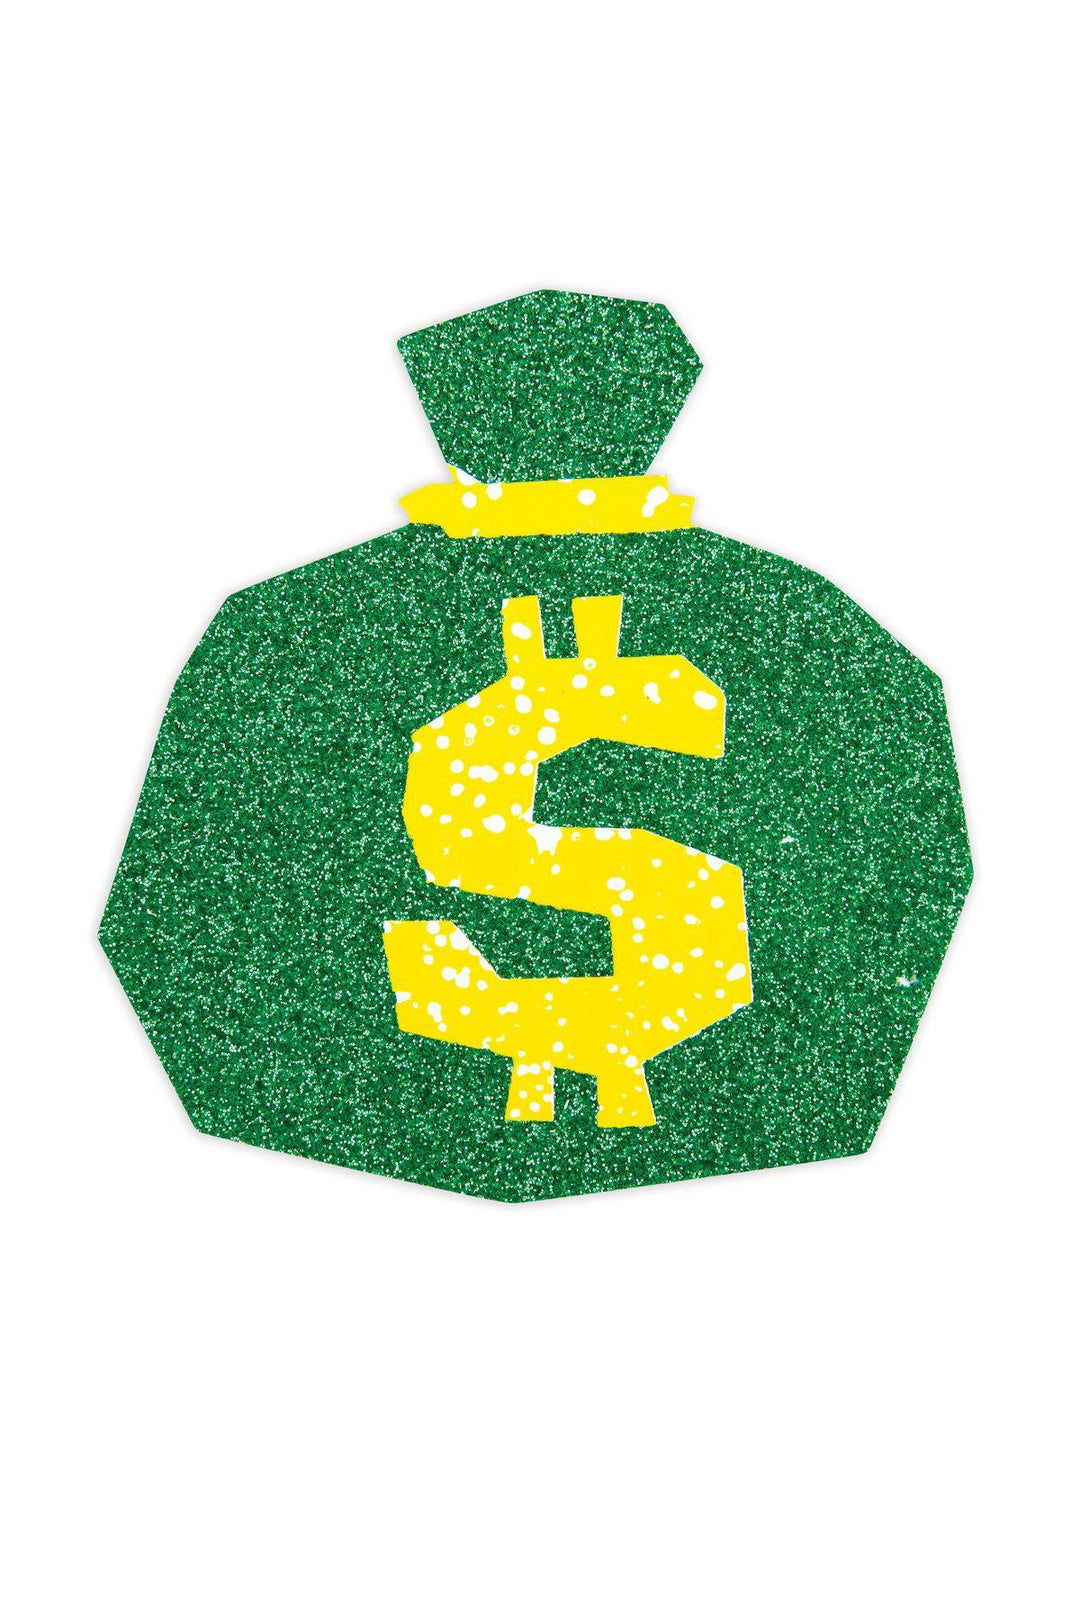 Money Bag Pasty-Pasties-Peekaboo Pasties-Green-O/S-SEXYSHOES.COM